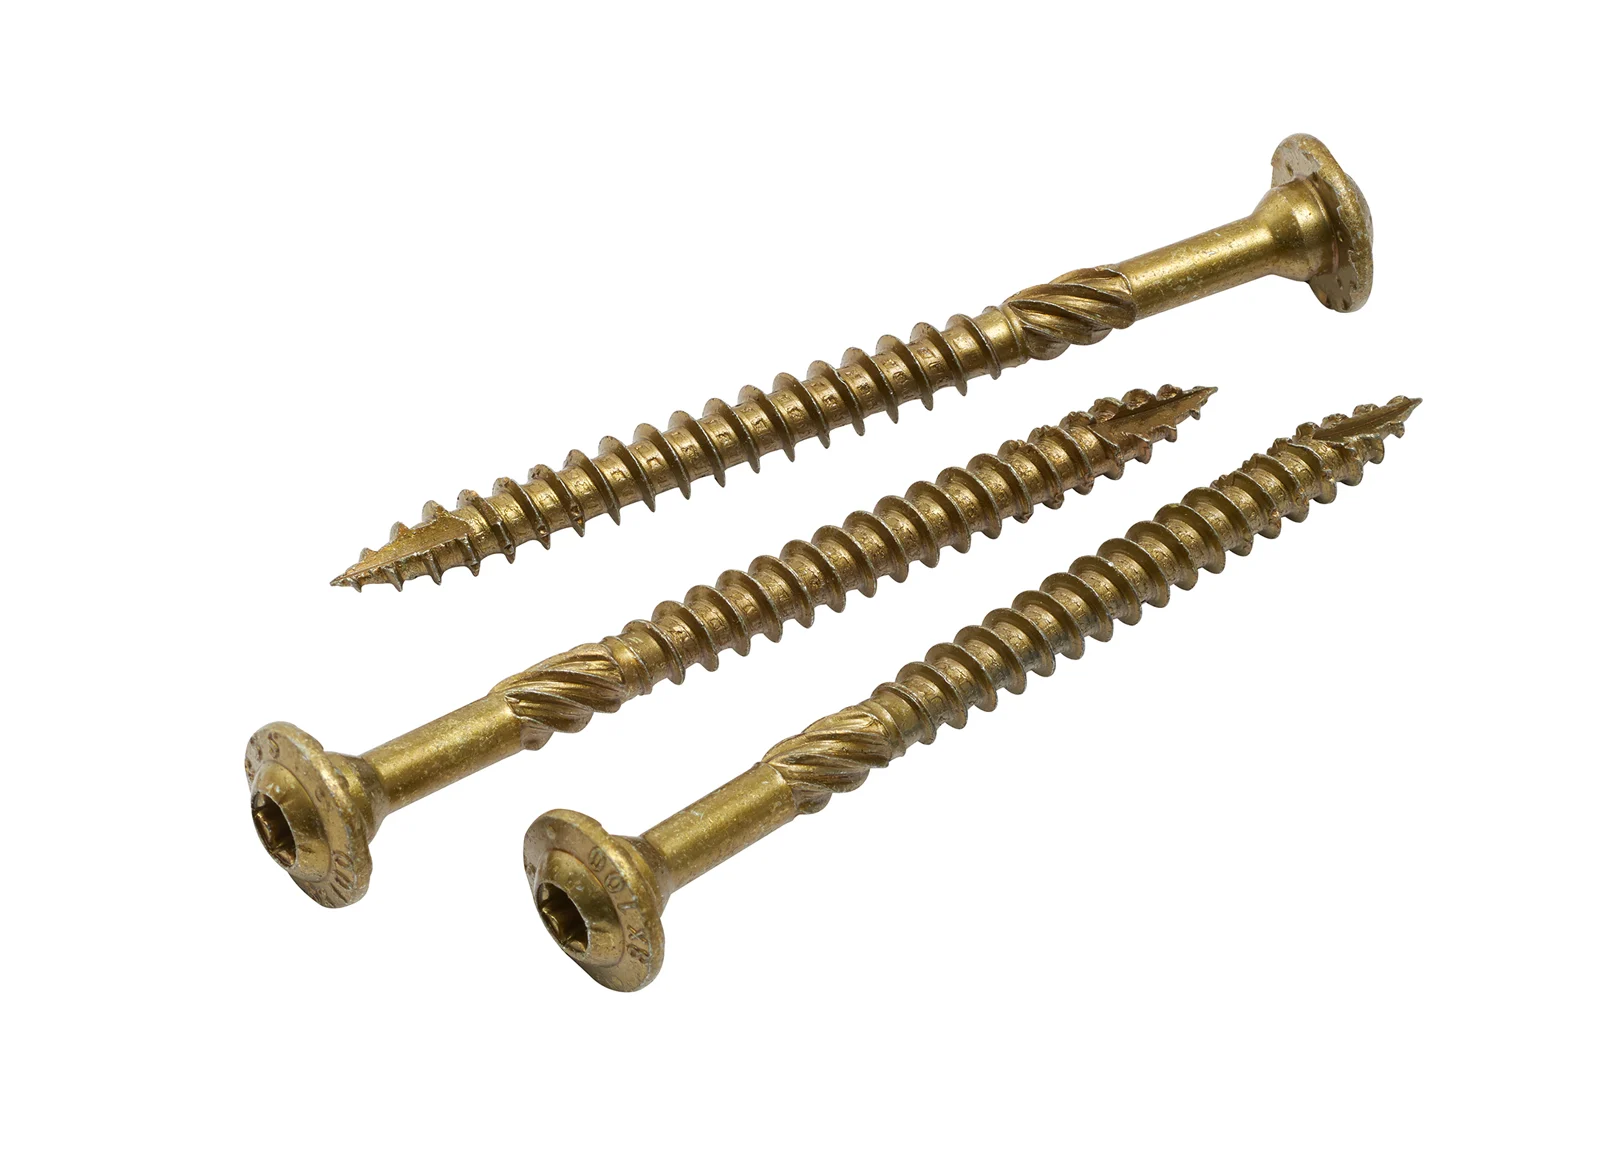 Structural wood screws